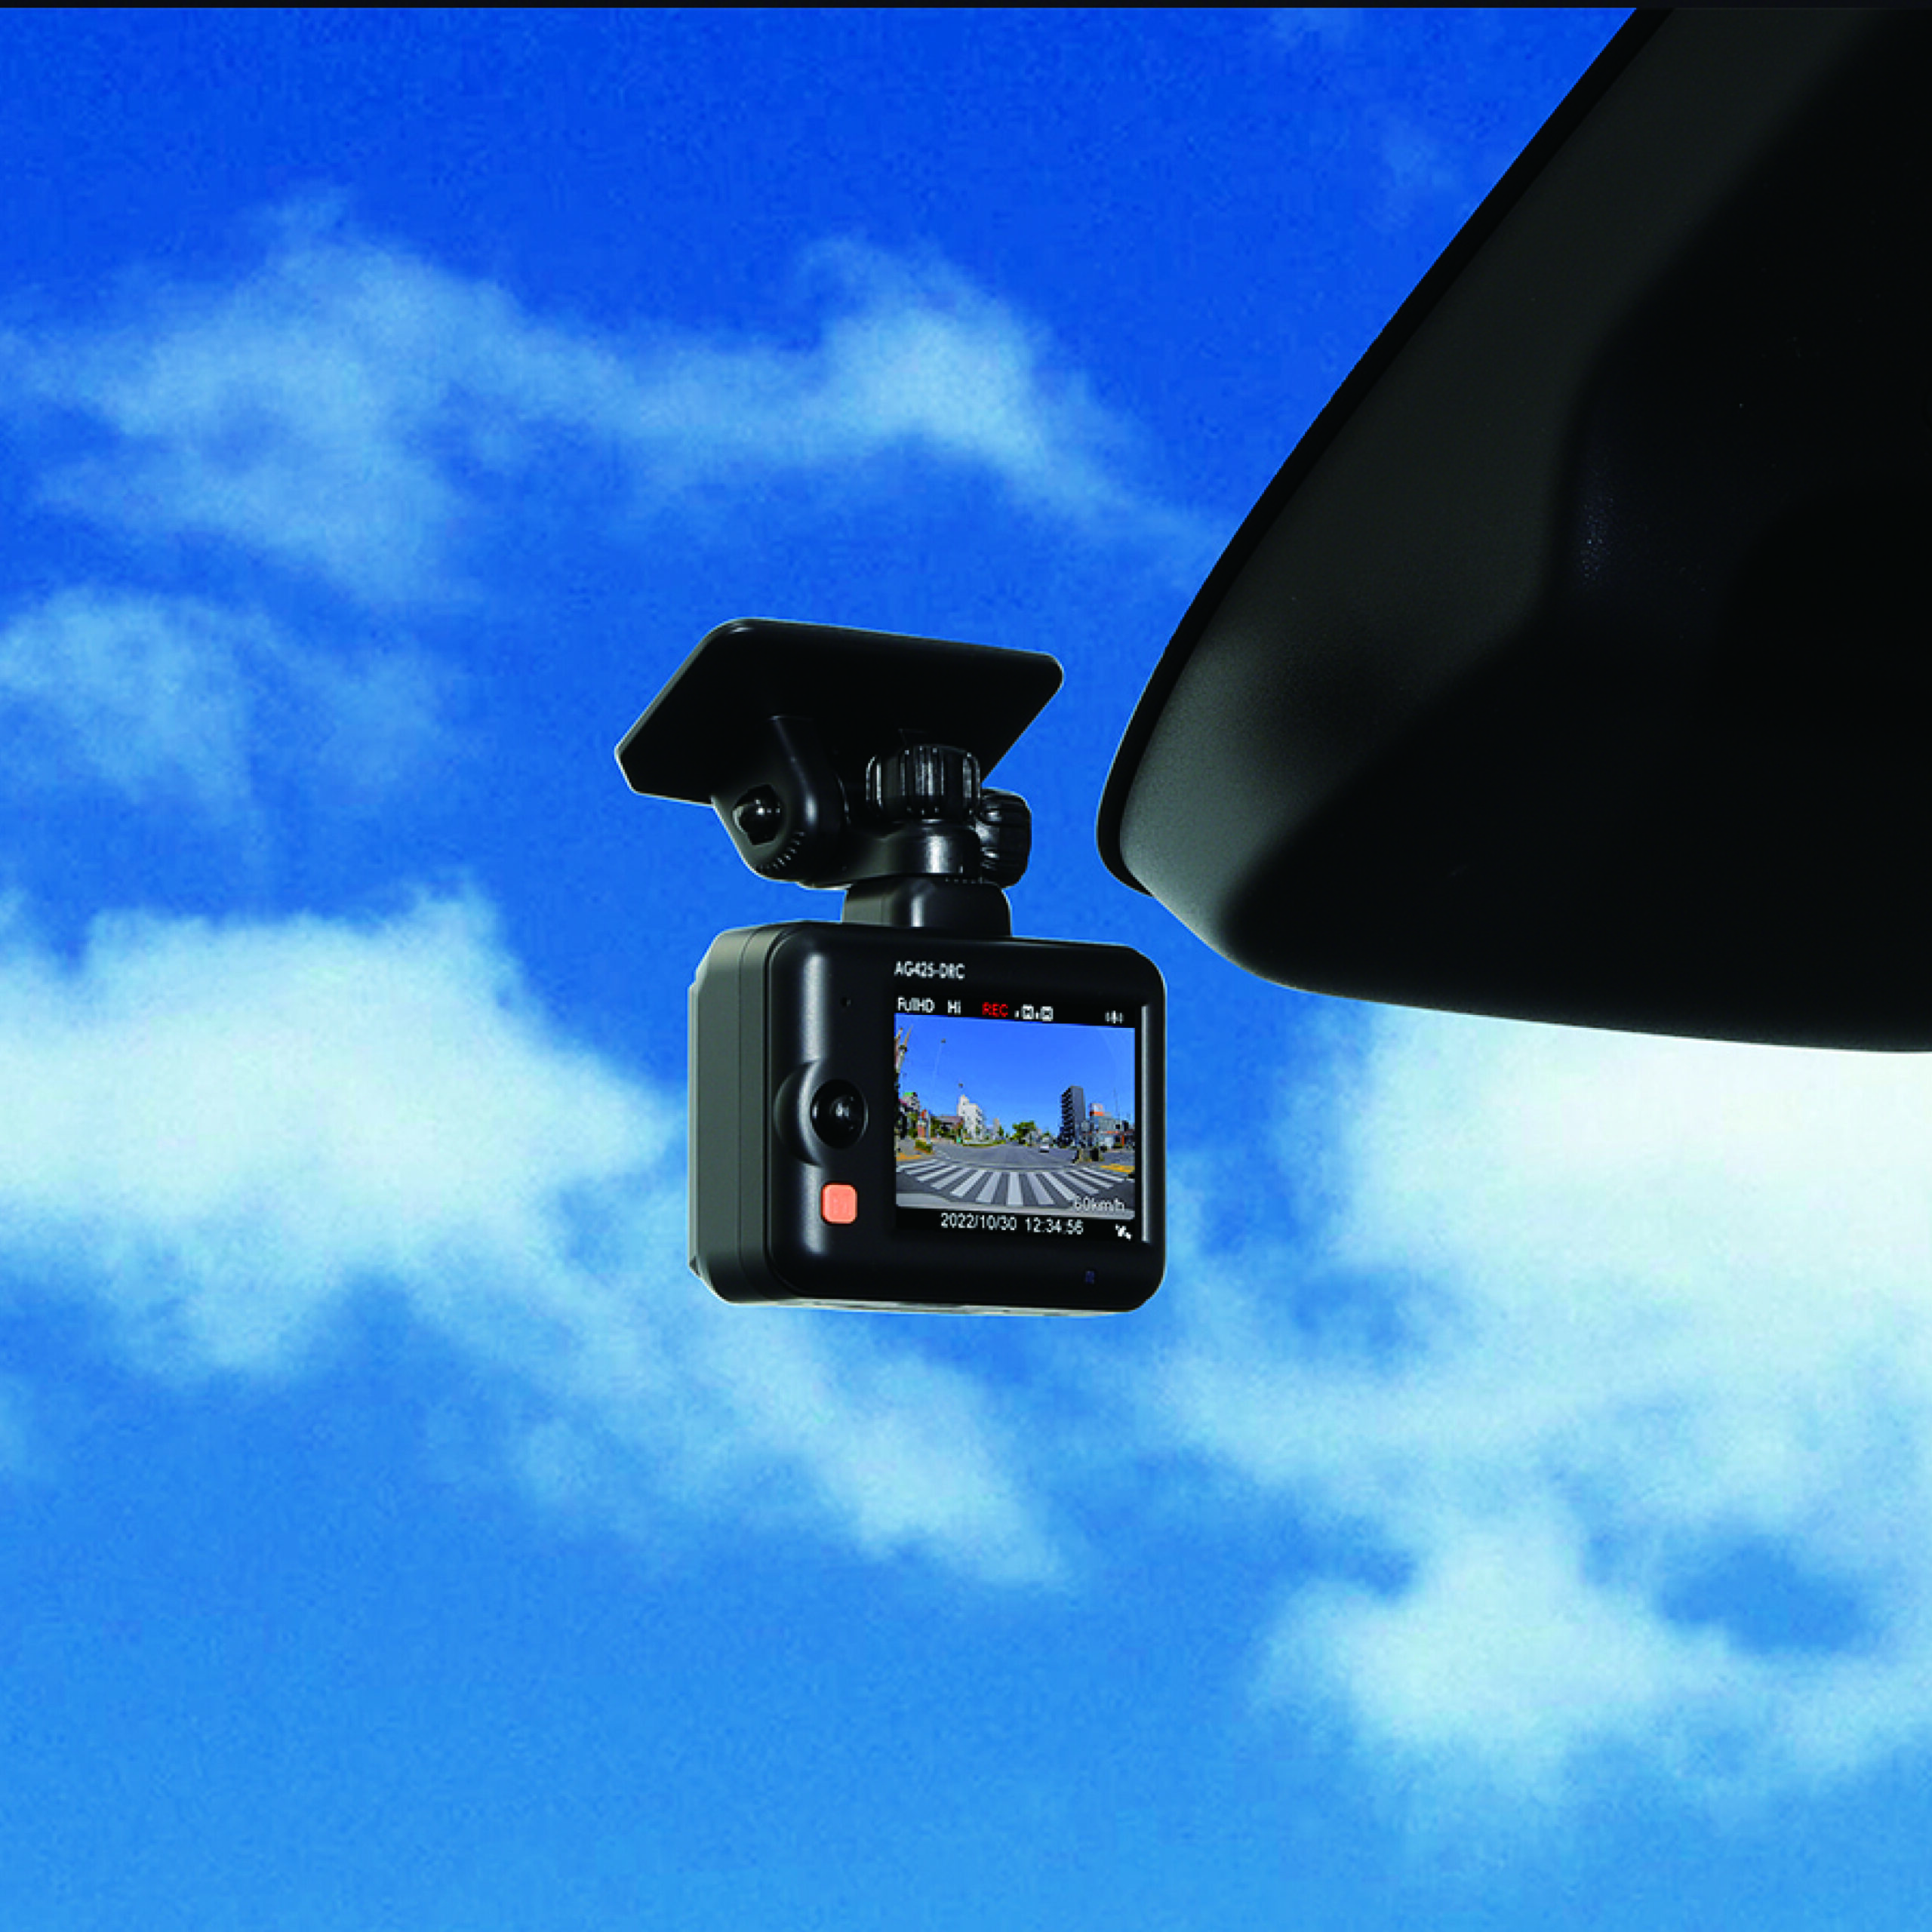 Elut AG425-DRCフロント/リア2カメラタイプ高性能ドライブレコーダー